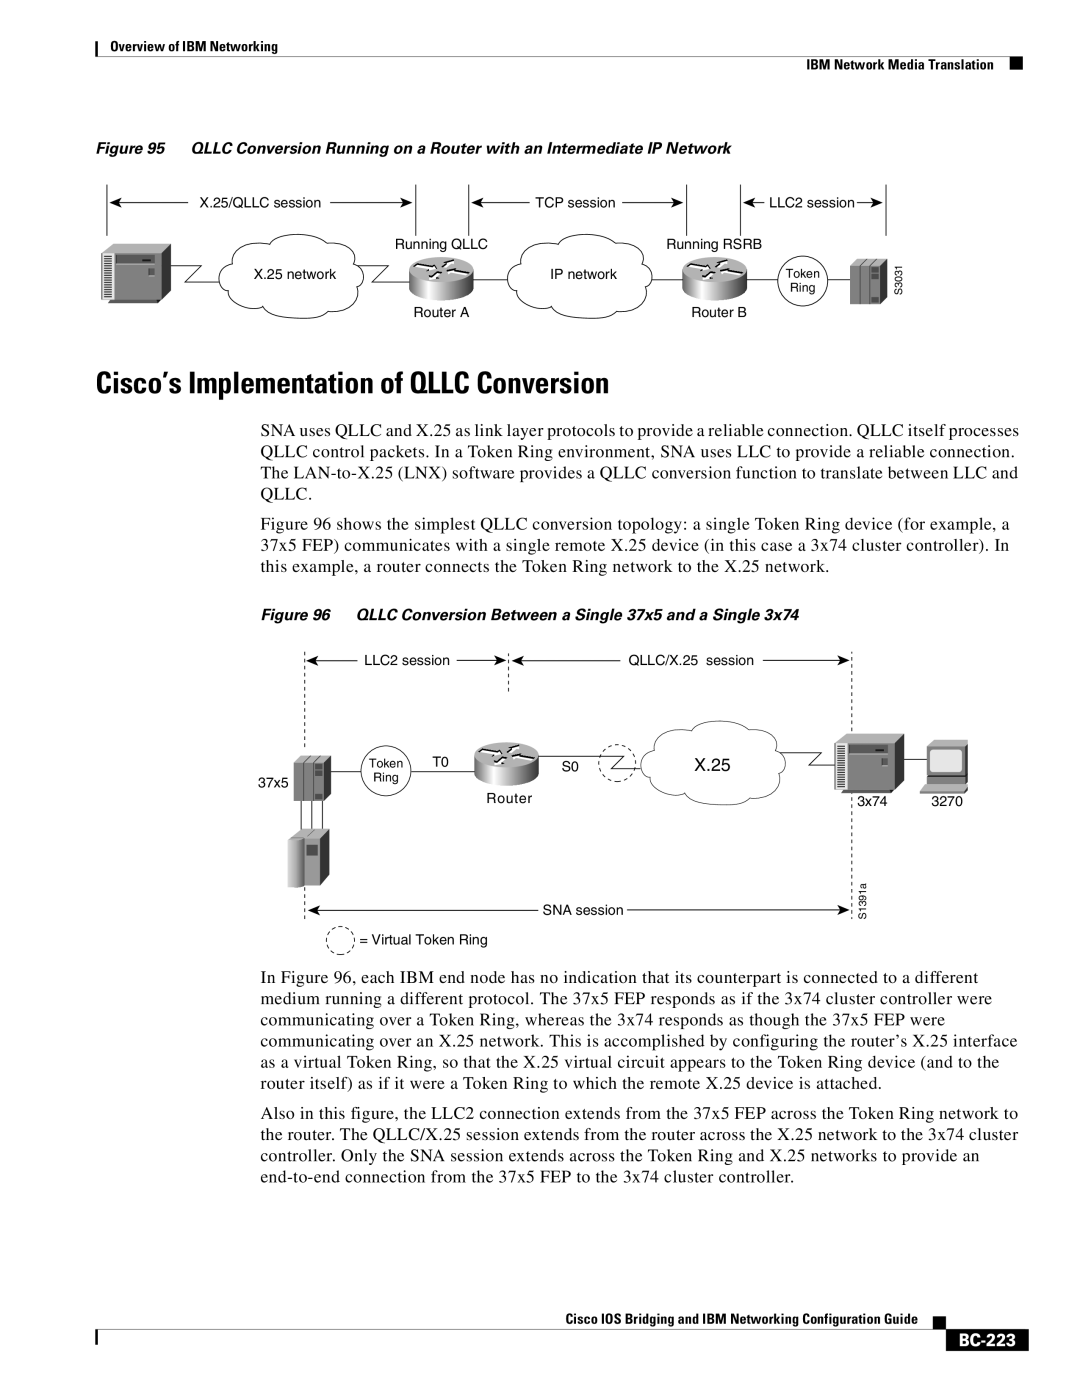 IBM BC-203 manual Cisco’s Implementation of QLLC Conversion, BC-223 